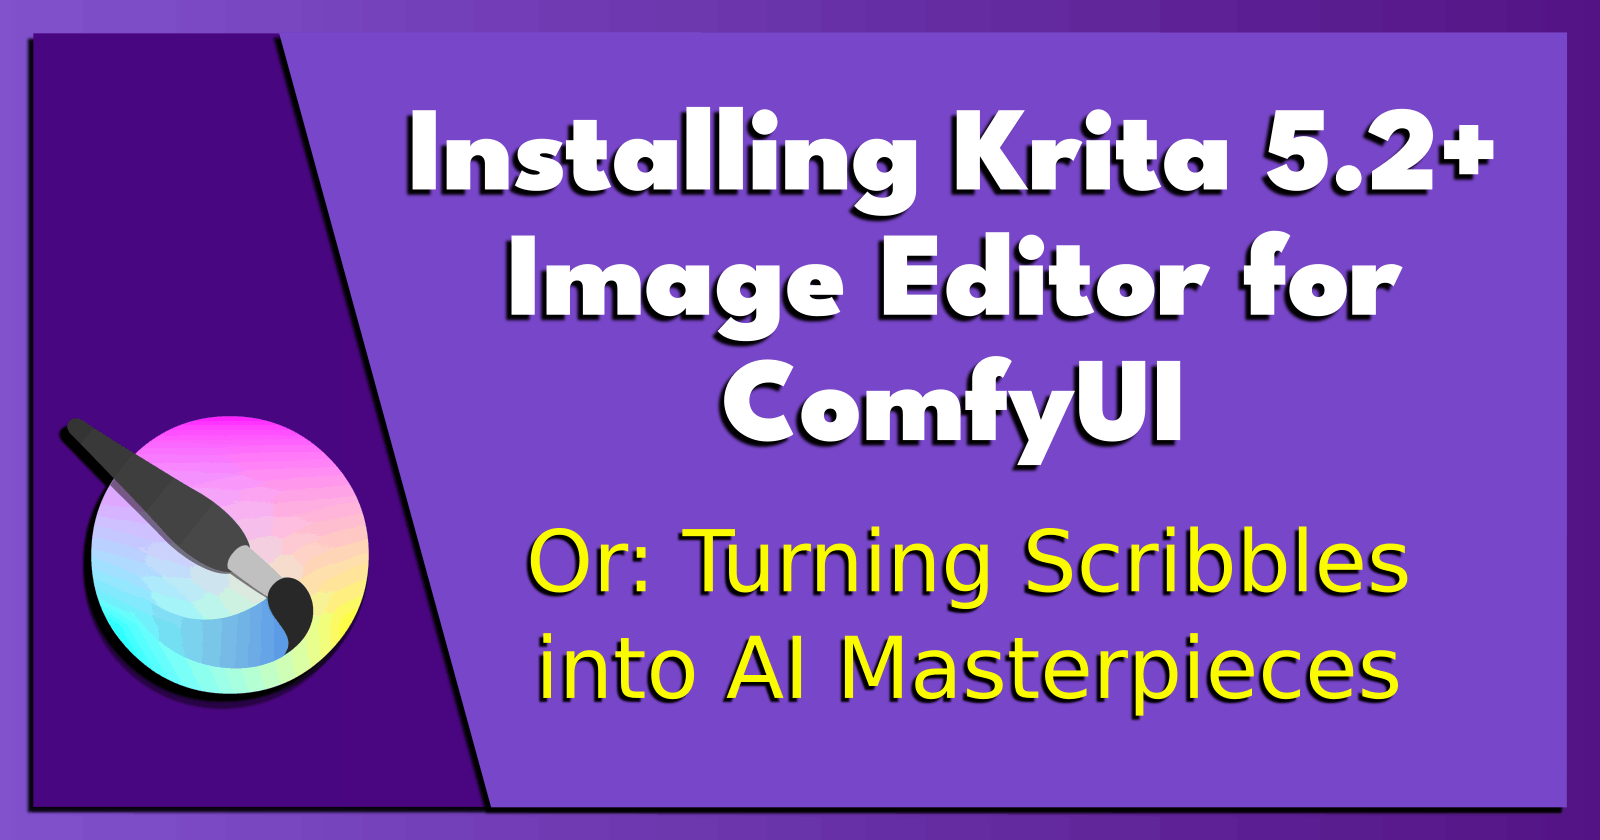 Installing Krita 5.2+ Image Editor for ComfyUI.